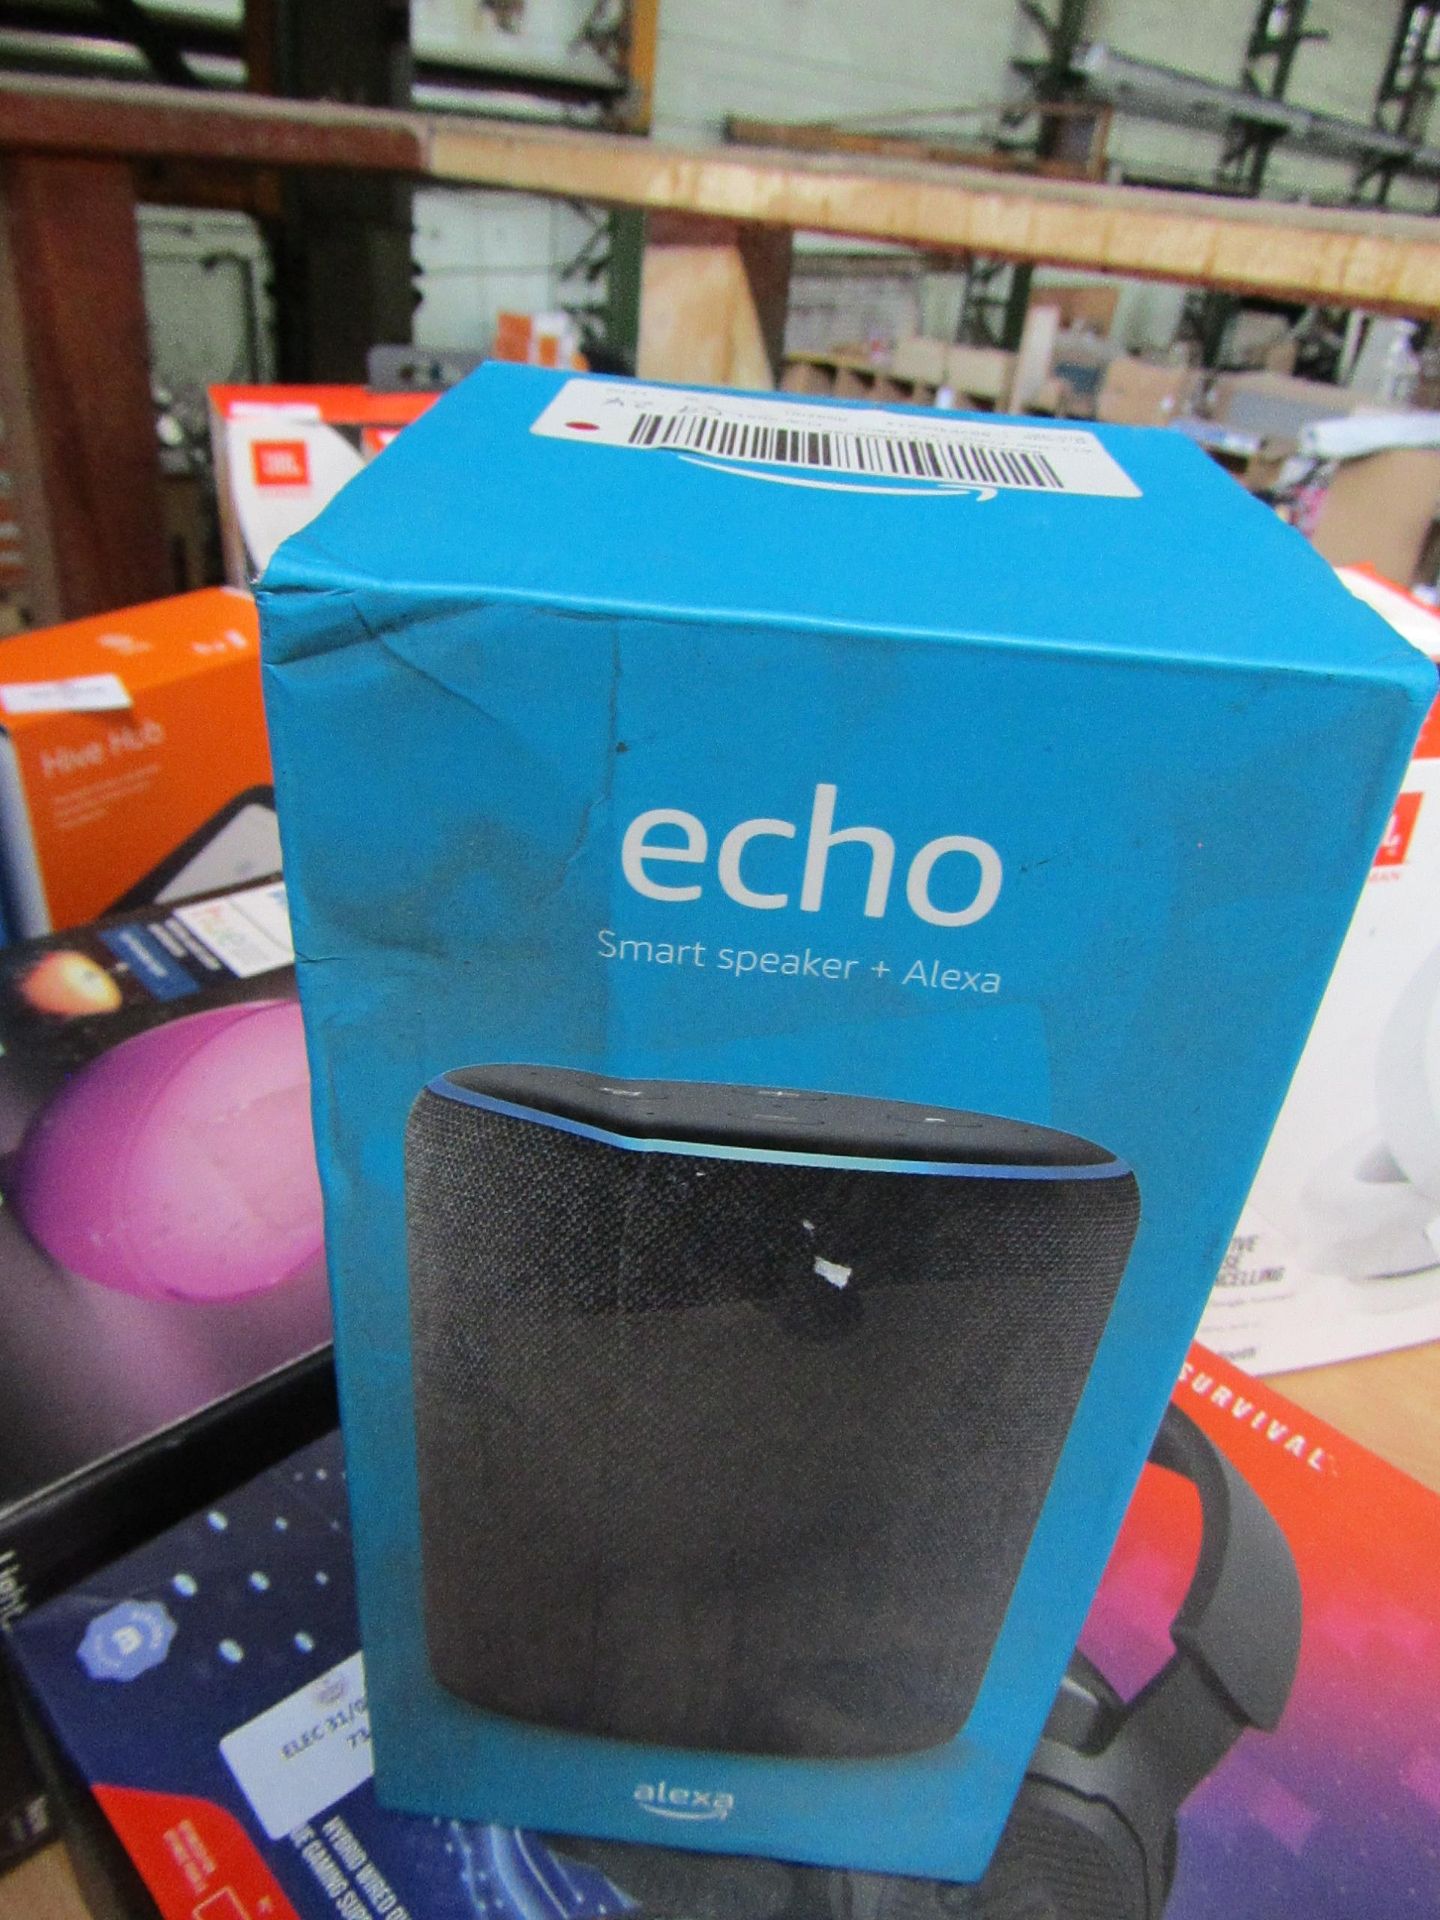 Amazon Echo 3rd gen smart speaker, unchecked in original box